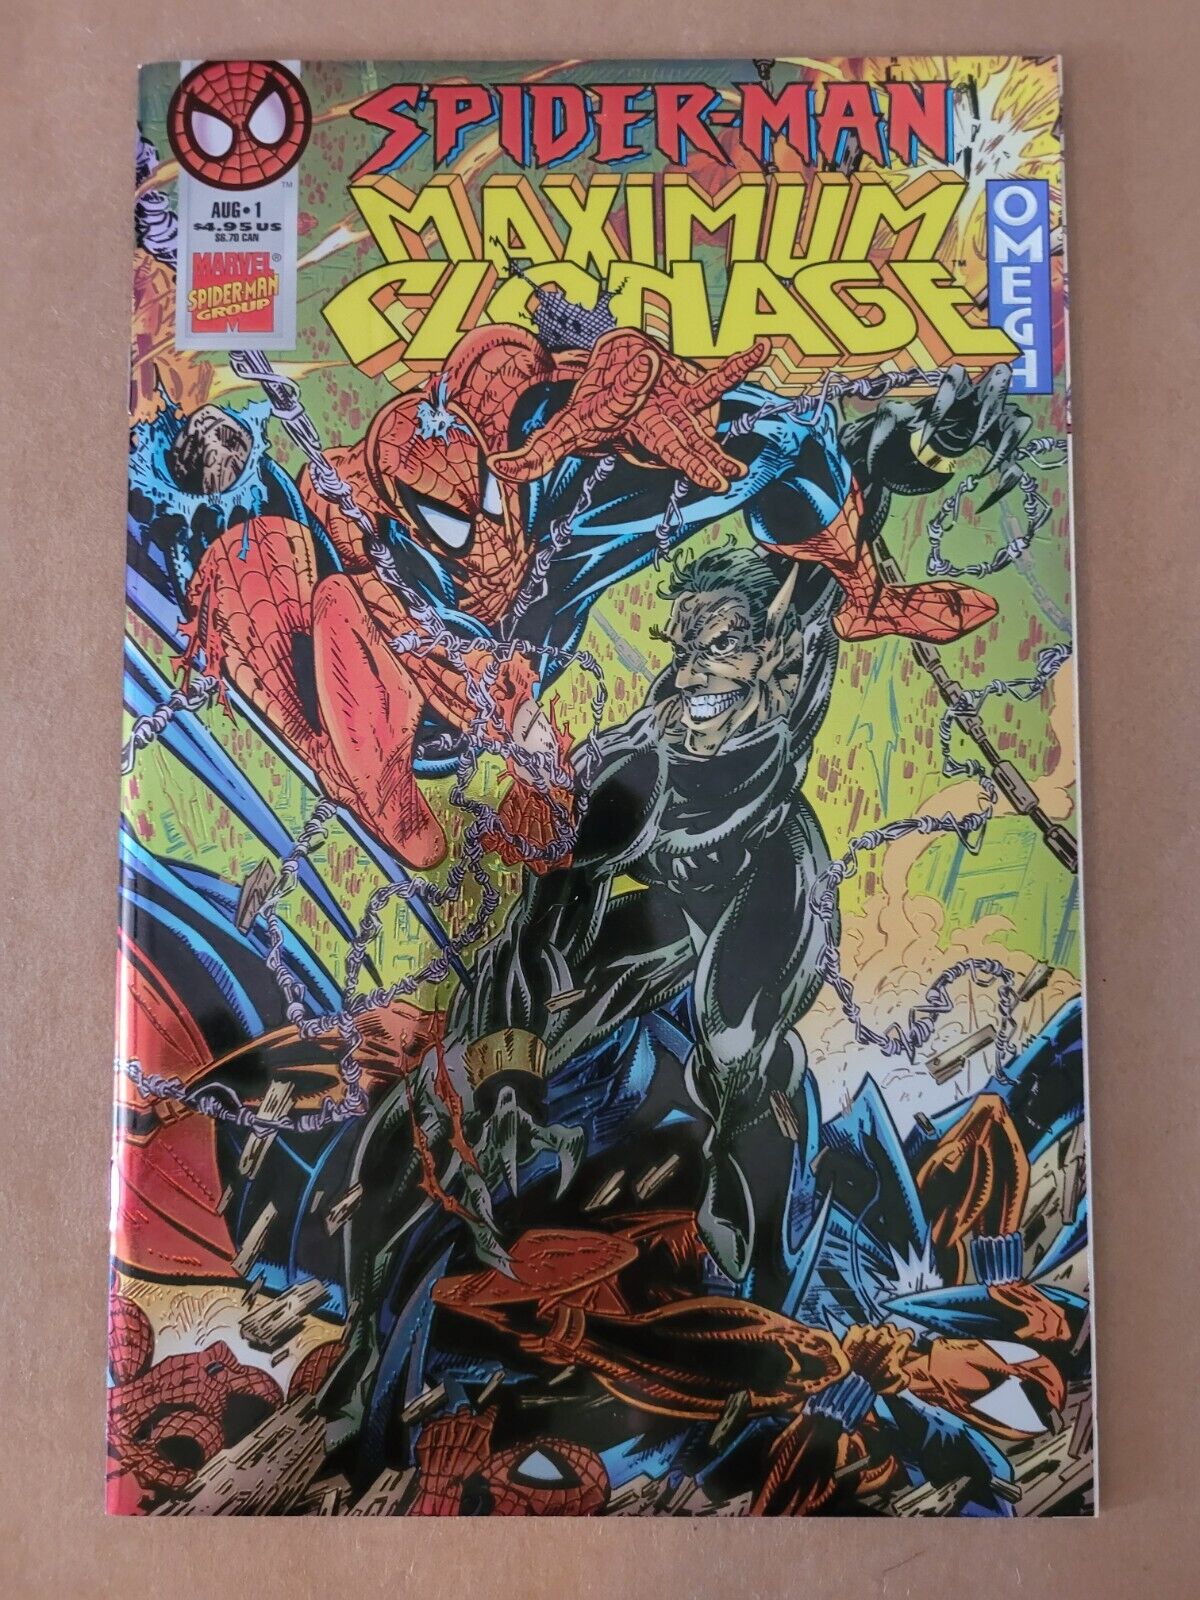 Spider-Man: Maximum Clonage Omega #1 Chromium Cover Newsstand High-Grade Marvel